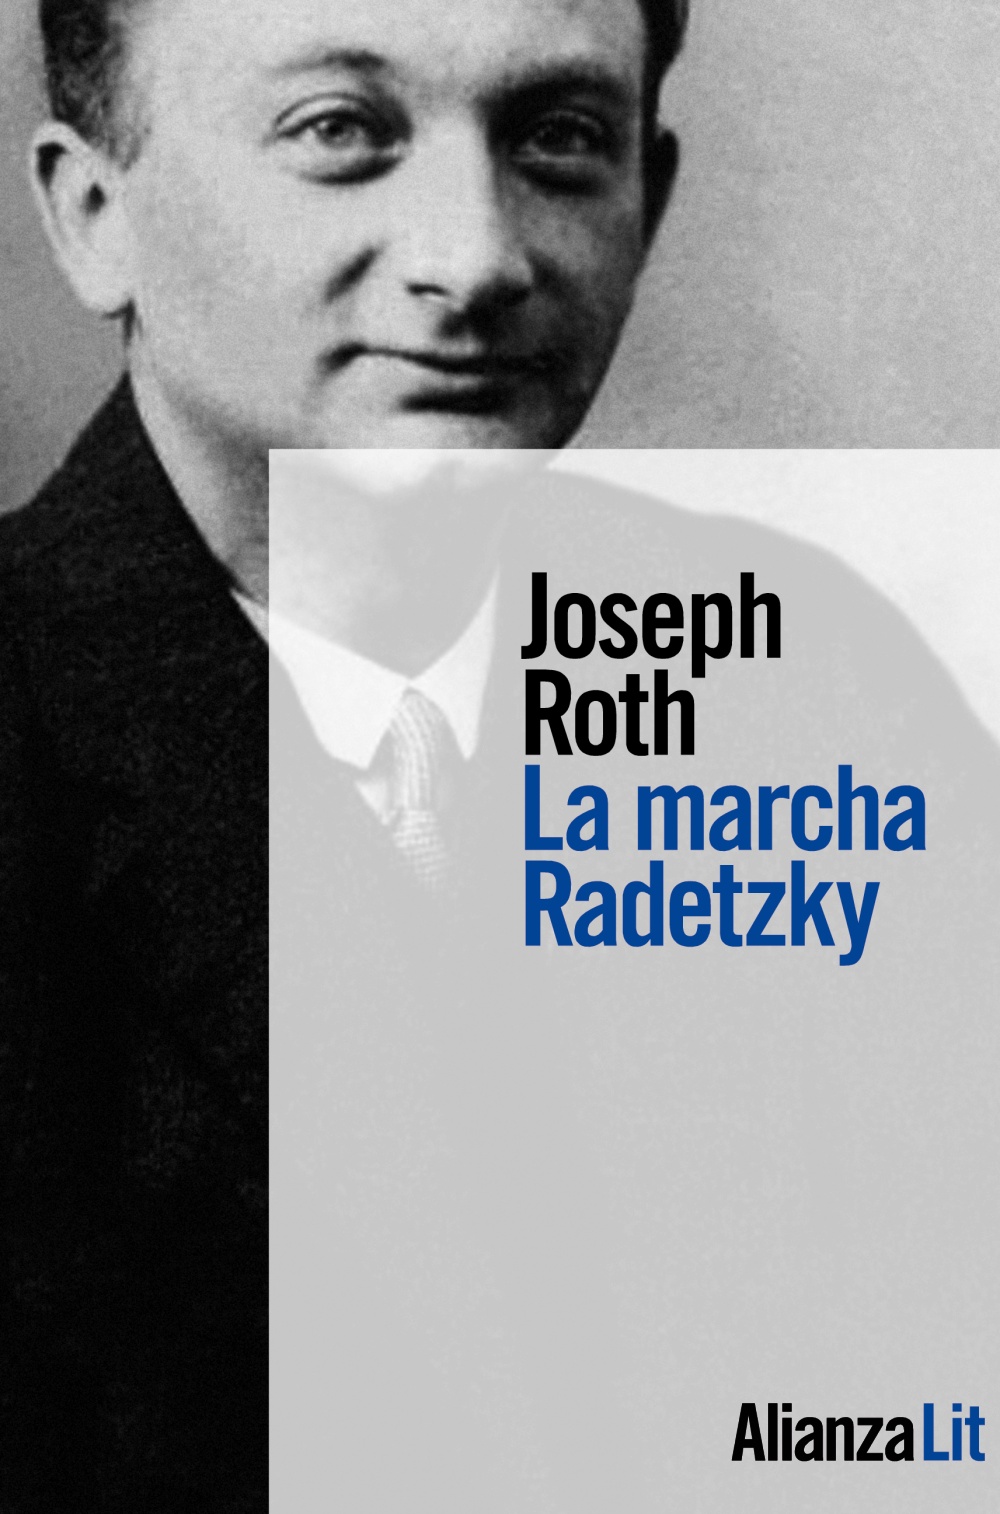 Portada de «La marcha Radetzky», de Joseph Roth (foto de fondo: el autor 